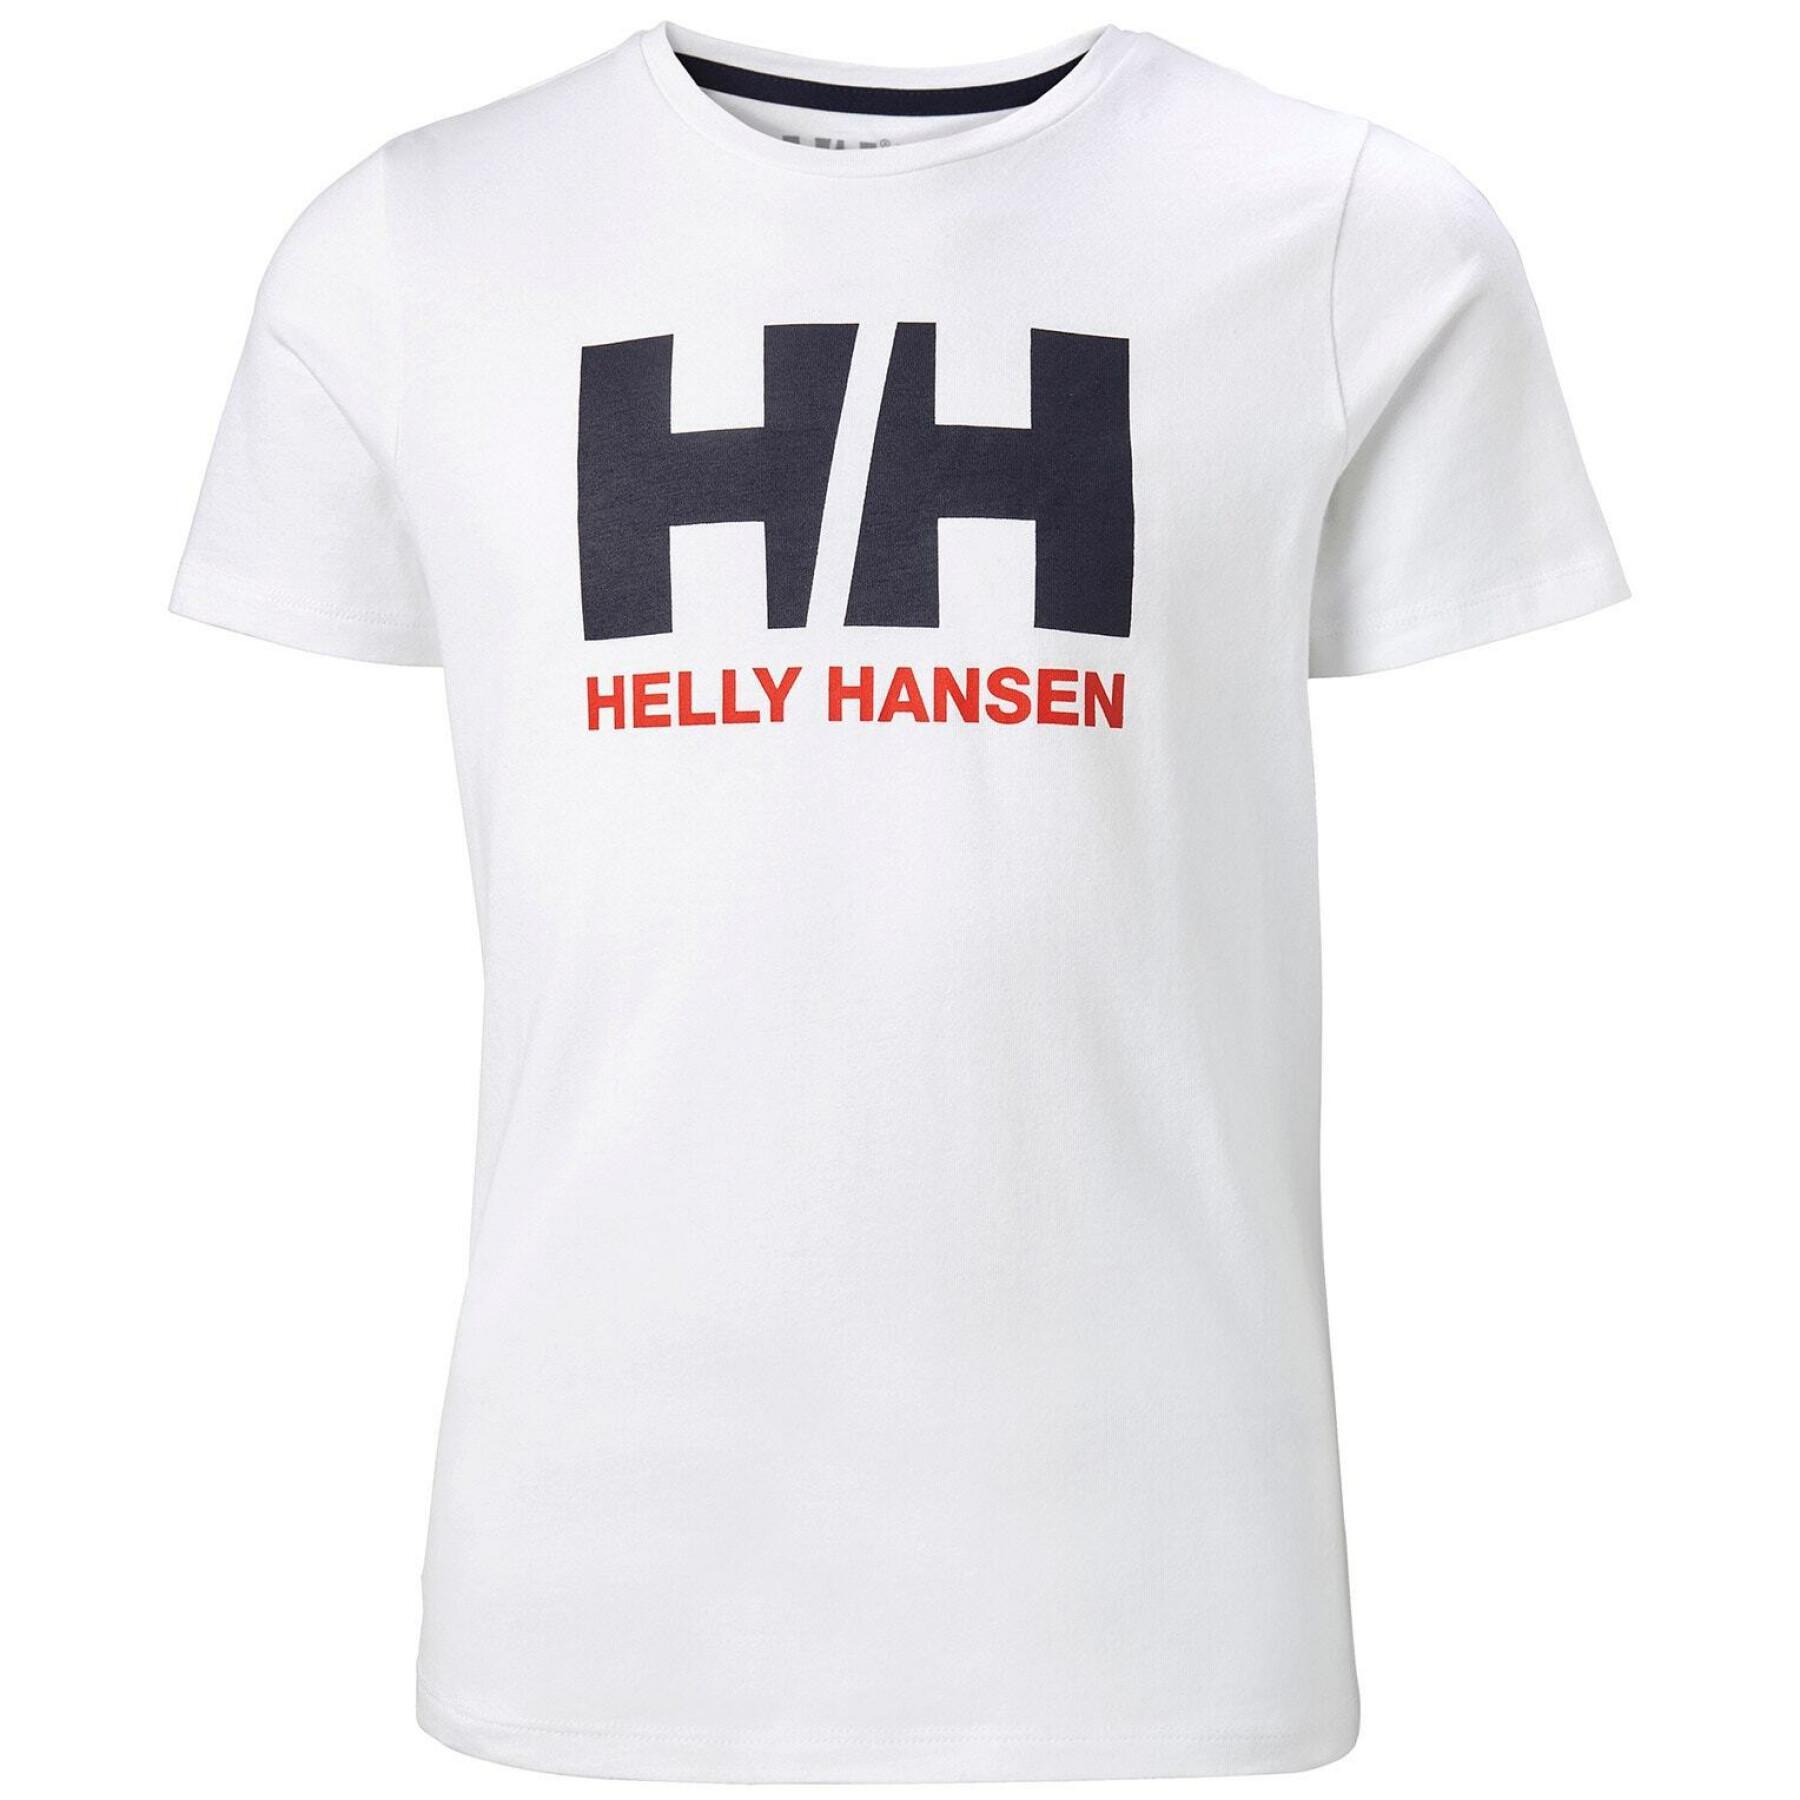 Koszulka z logo dziecka Helly Hansen